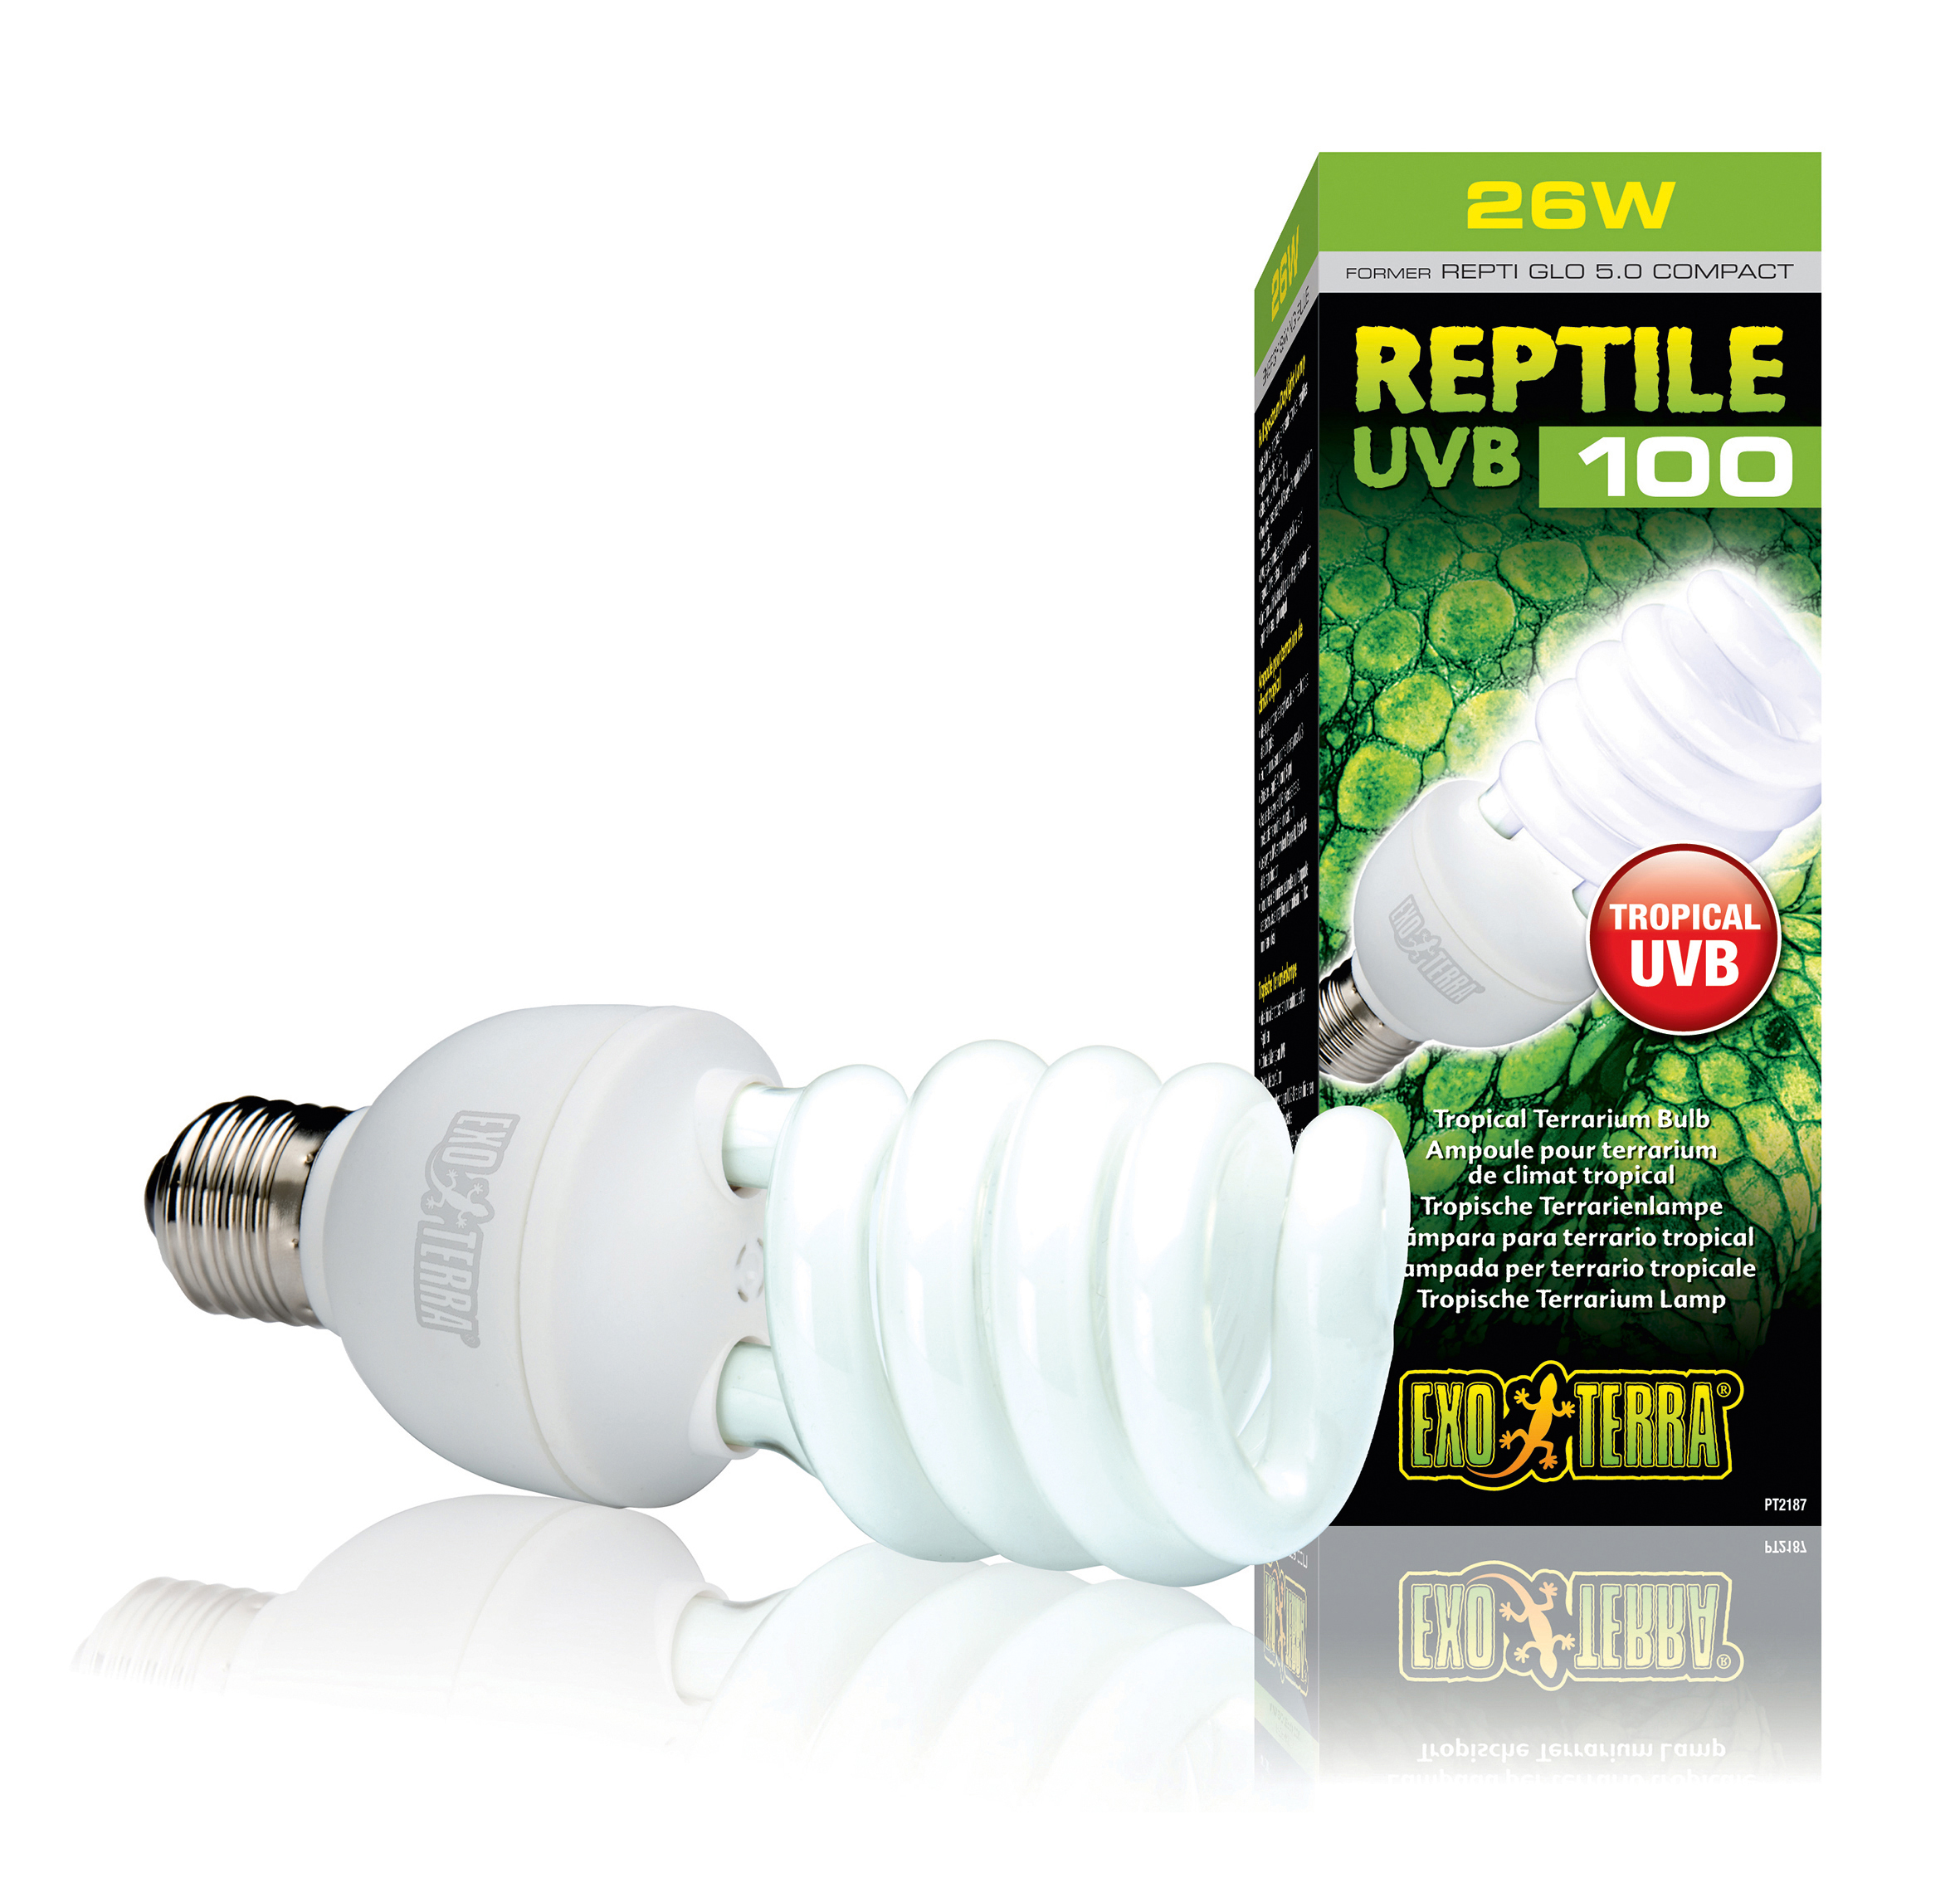 Ex reptile uvb100 tropenlampe - <Product shot>